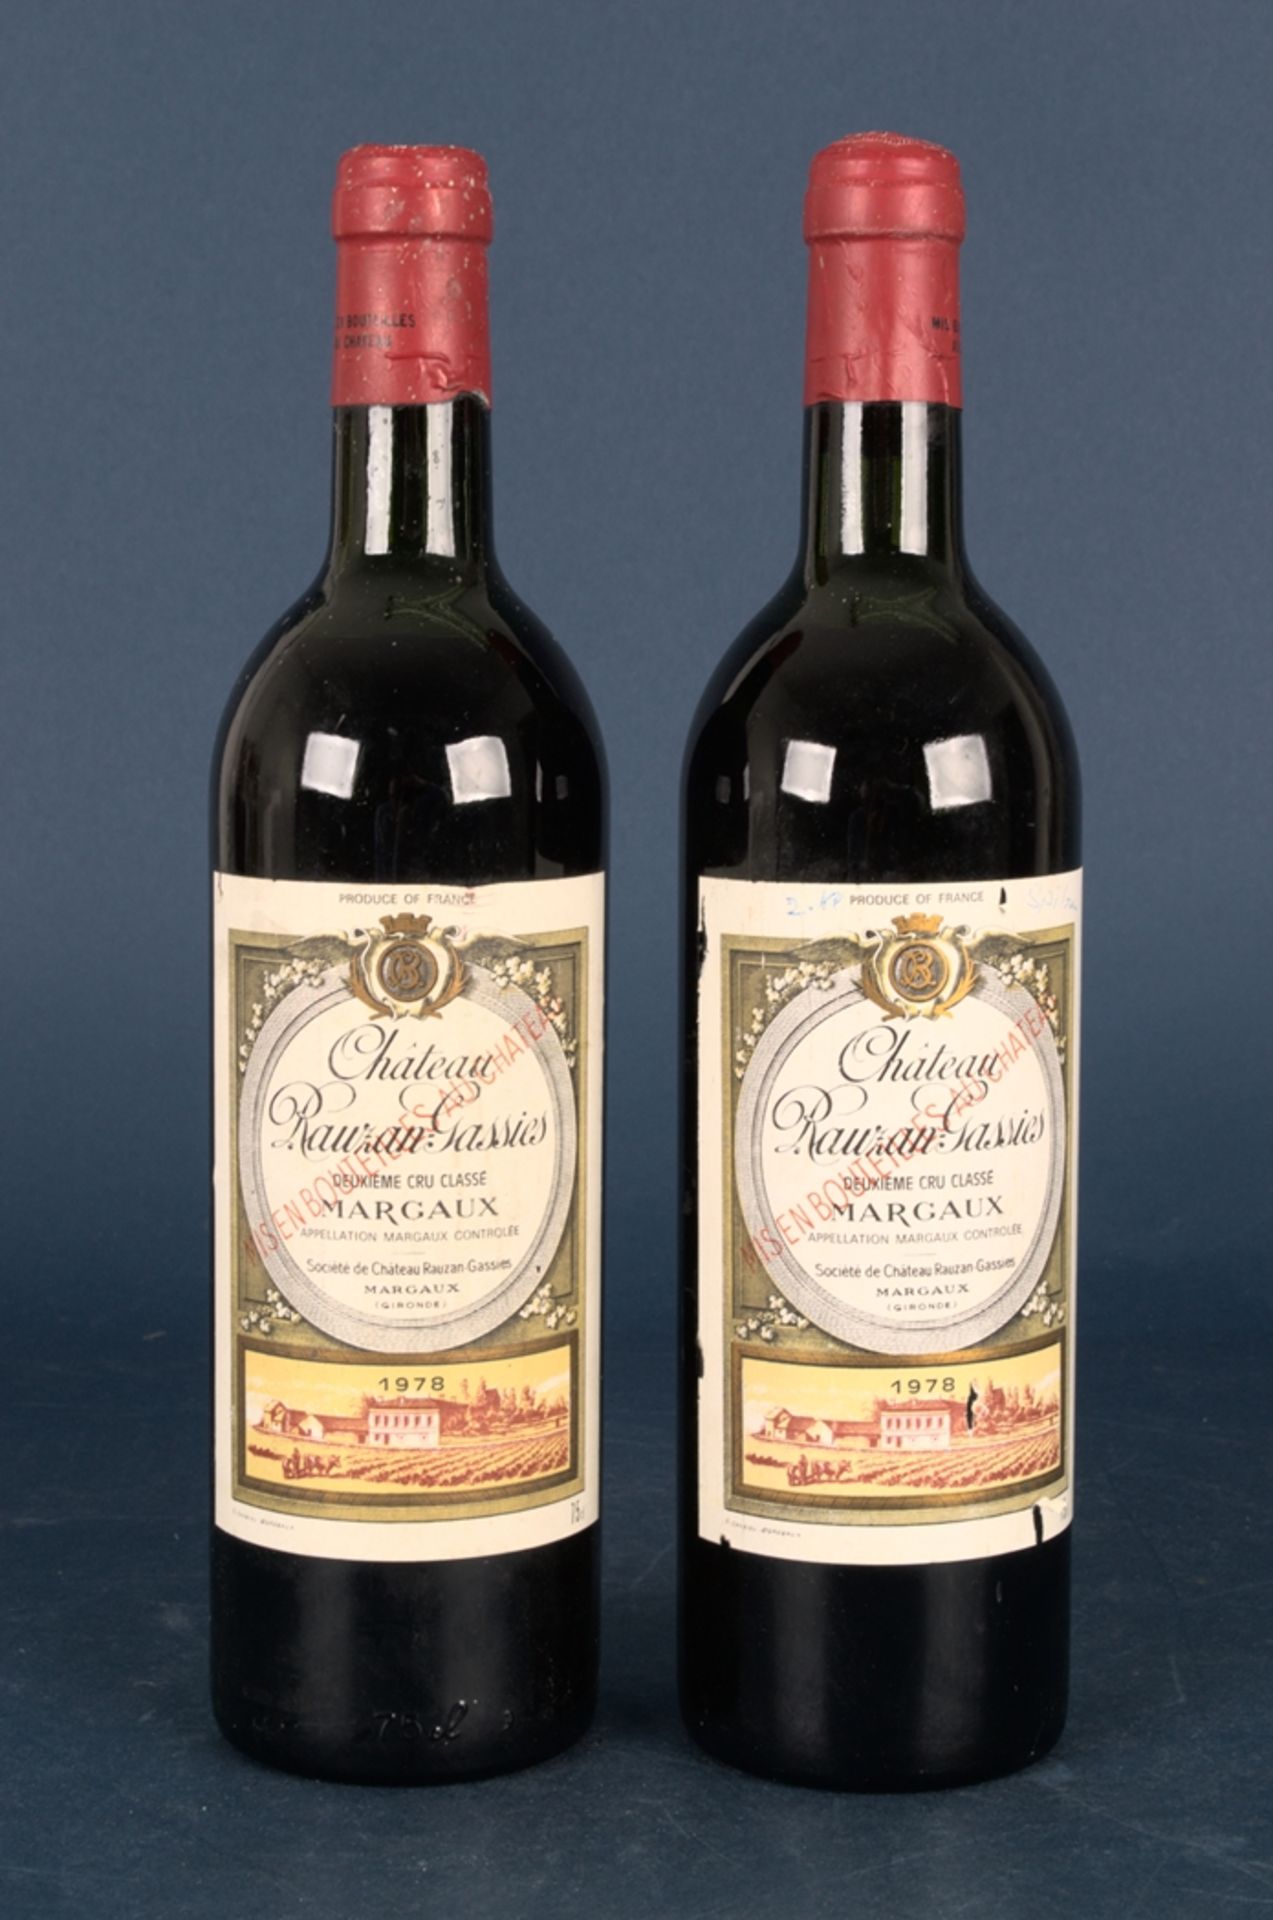 2 Flaschen Rotwein 1978er "Chateau Rauzan Gassies", 2eme Grand Cru Classe Margaux Bordeaux. - Bild 2 aus 9